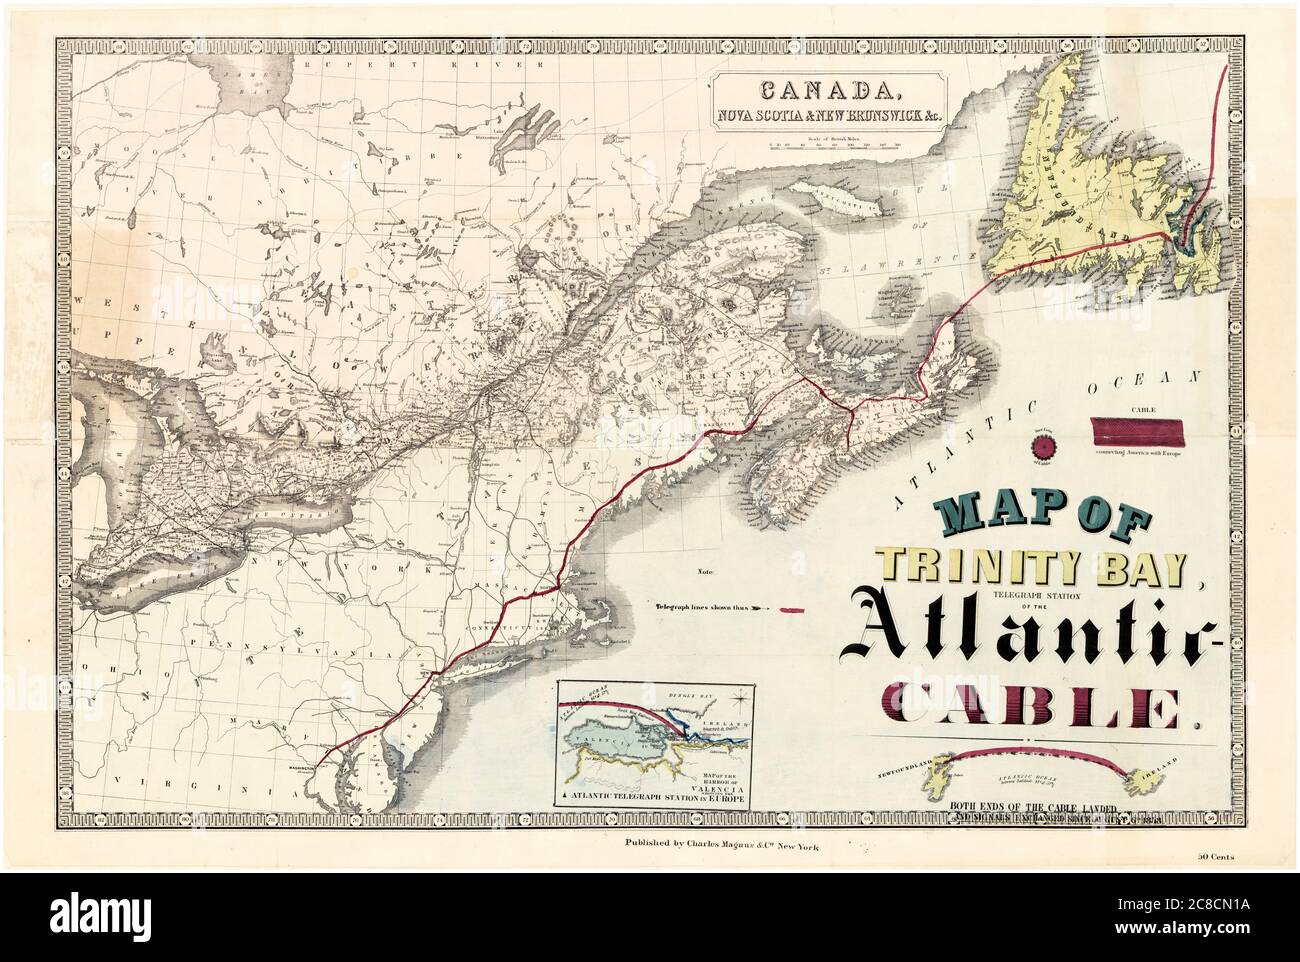 Map of Trinity Bay, Newfoundland, the Telegraph Station of the Transatlantic Cable across the Atlantic Ocean, 1858 Stock Photo